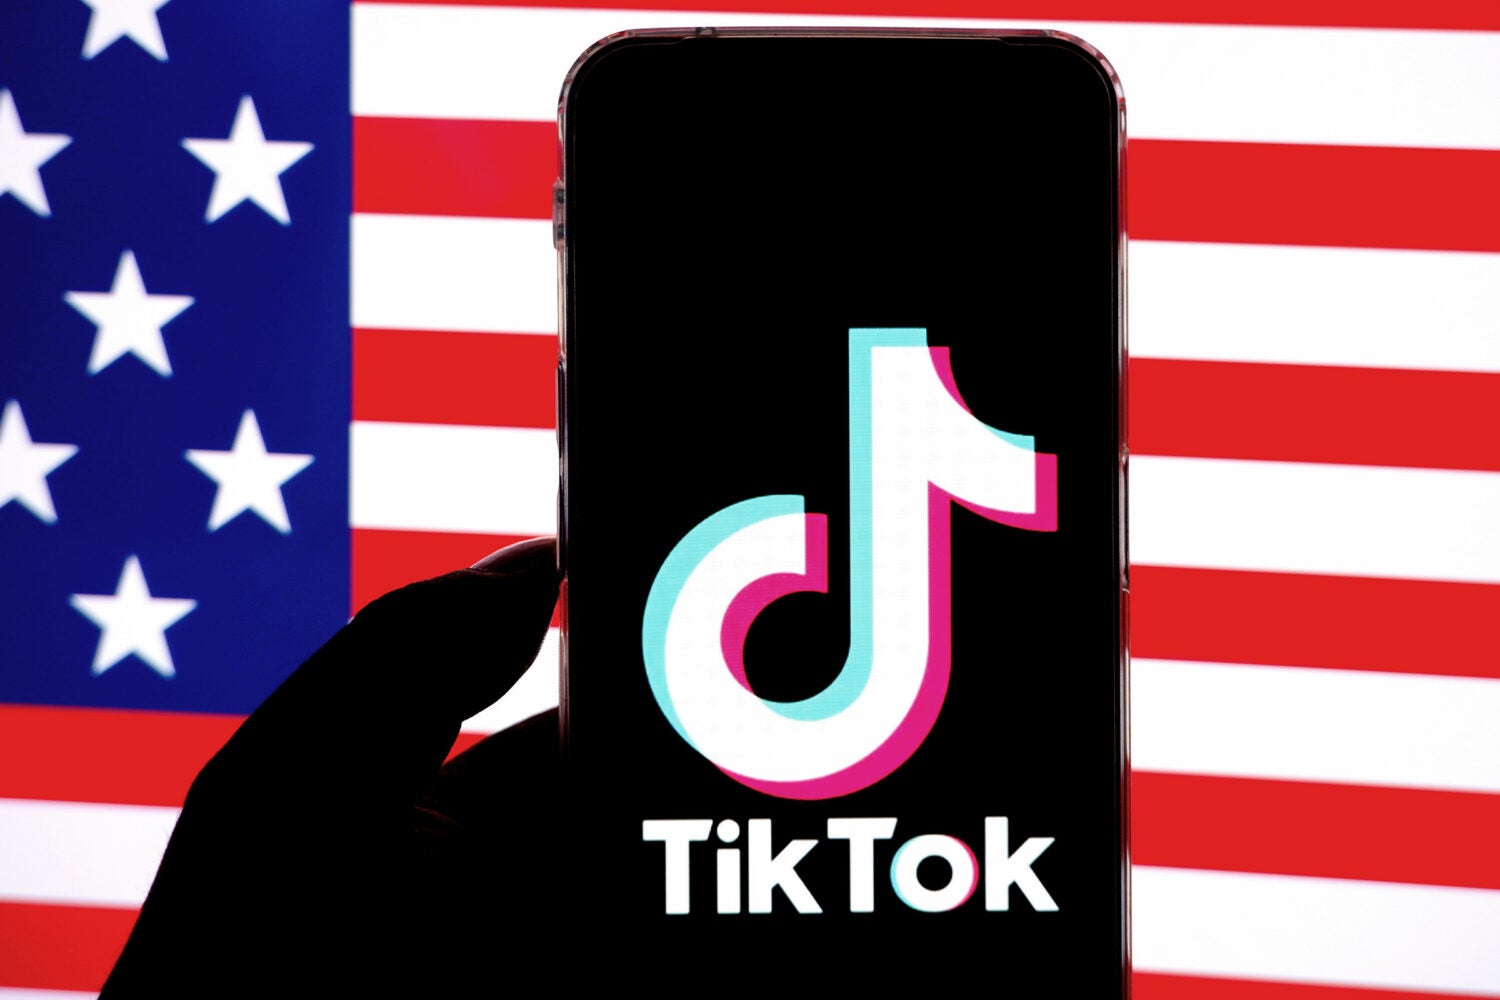 Will the US ban TikTok? - Harvard Law School | Harvard Law School